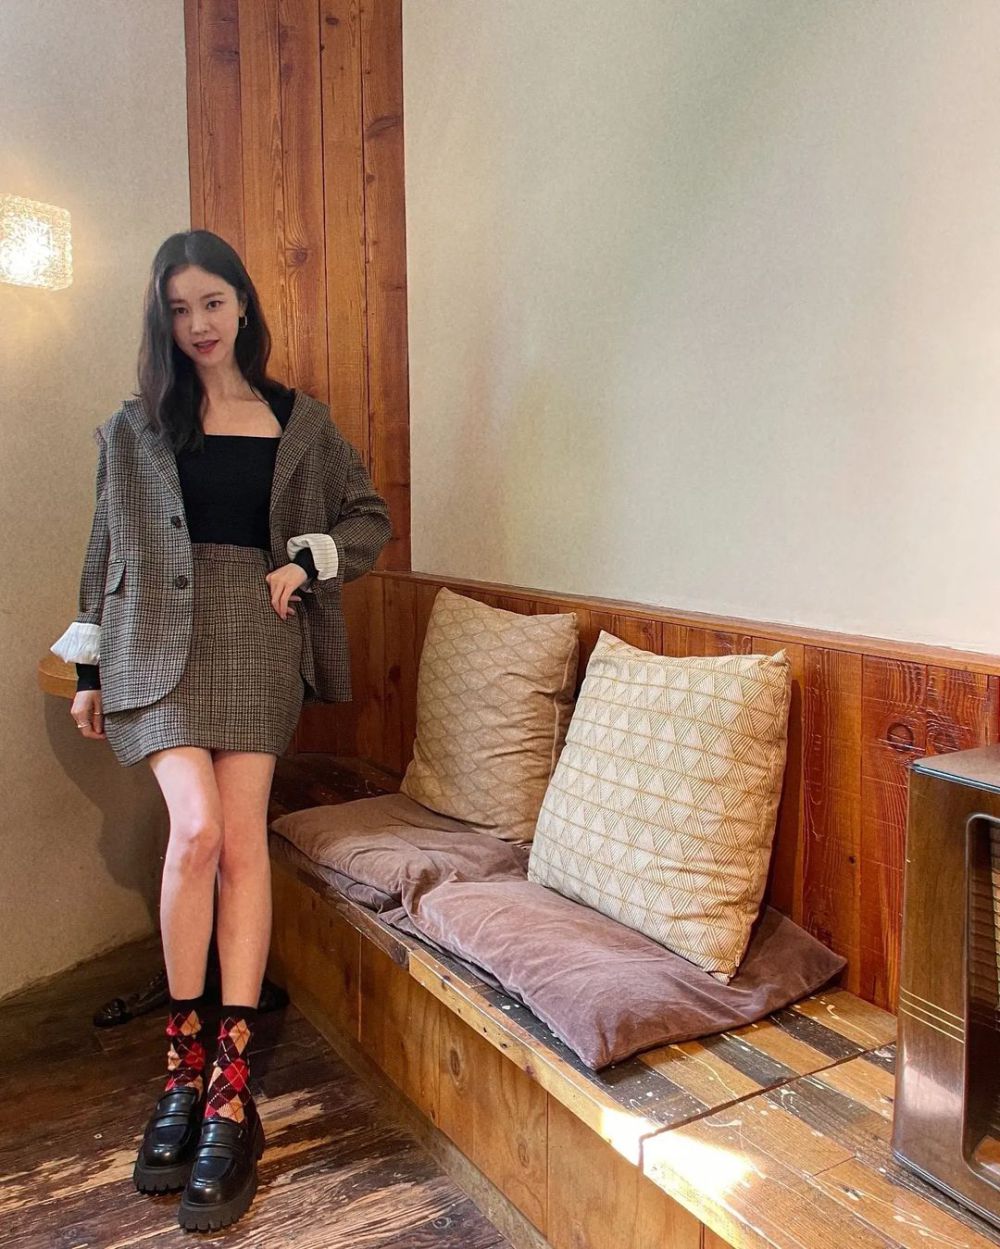 11 Ide Outfit Korean Style ala Kim Yewon yang Stylish buat ke Kantor!